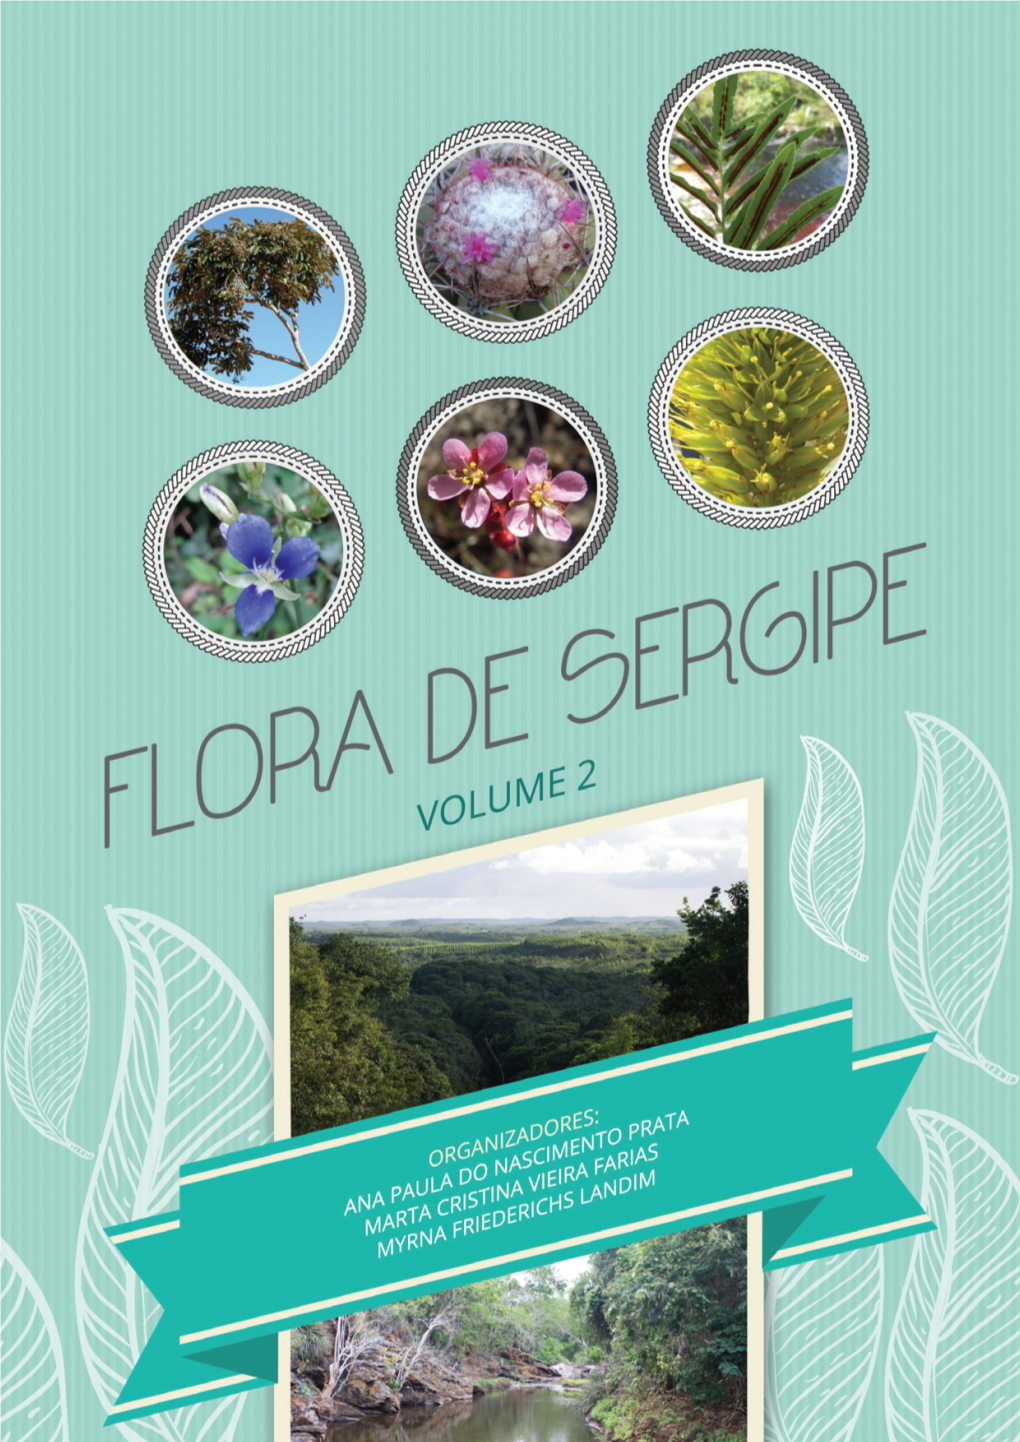 Floradesergipe2015.Pdf